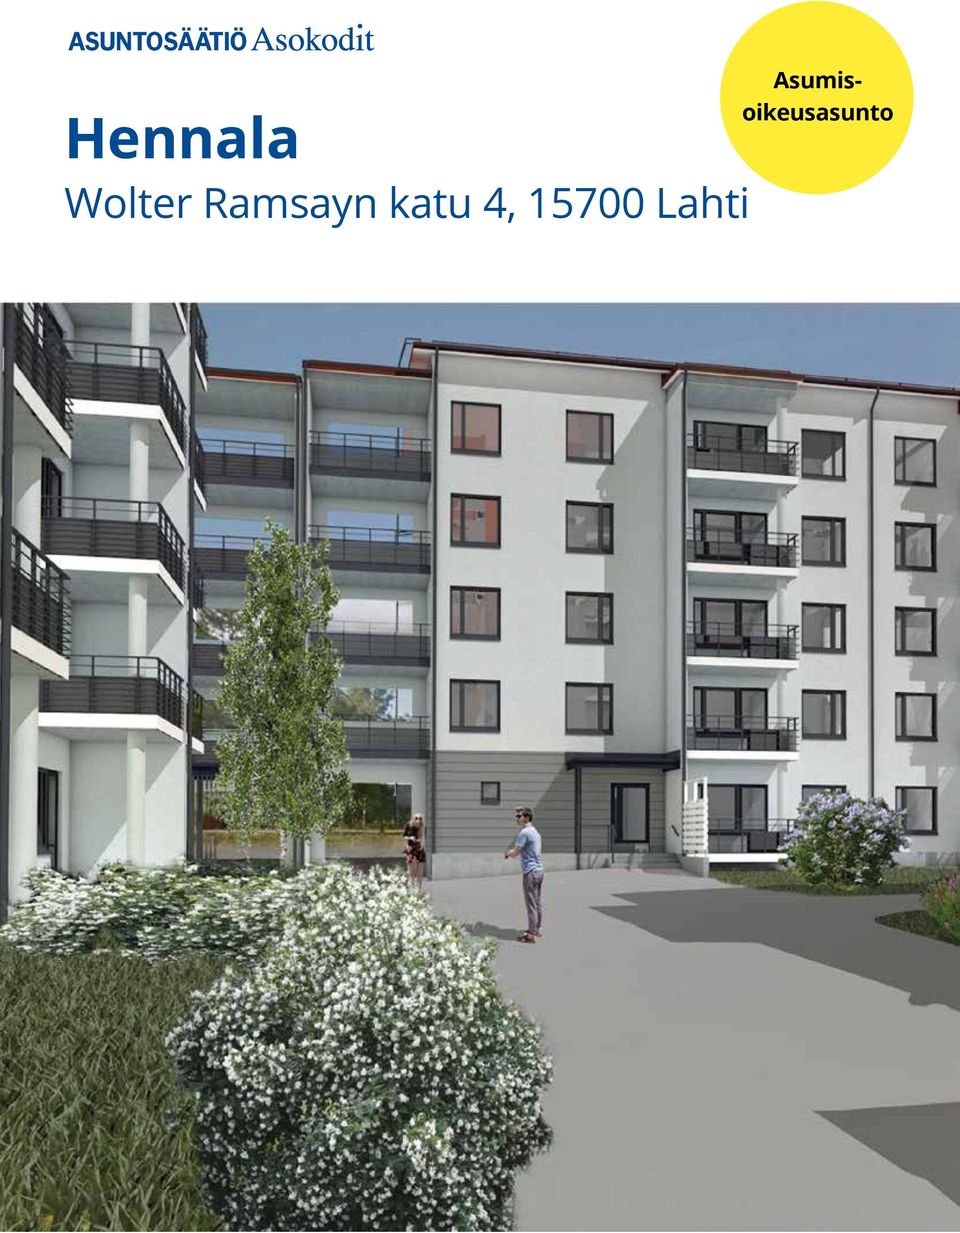 15700 Lahti